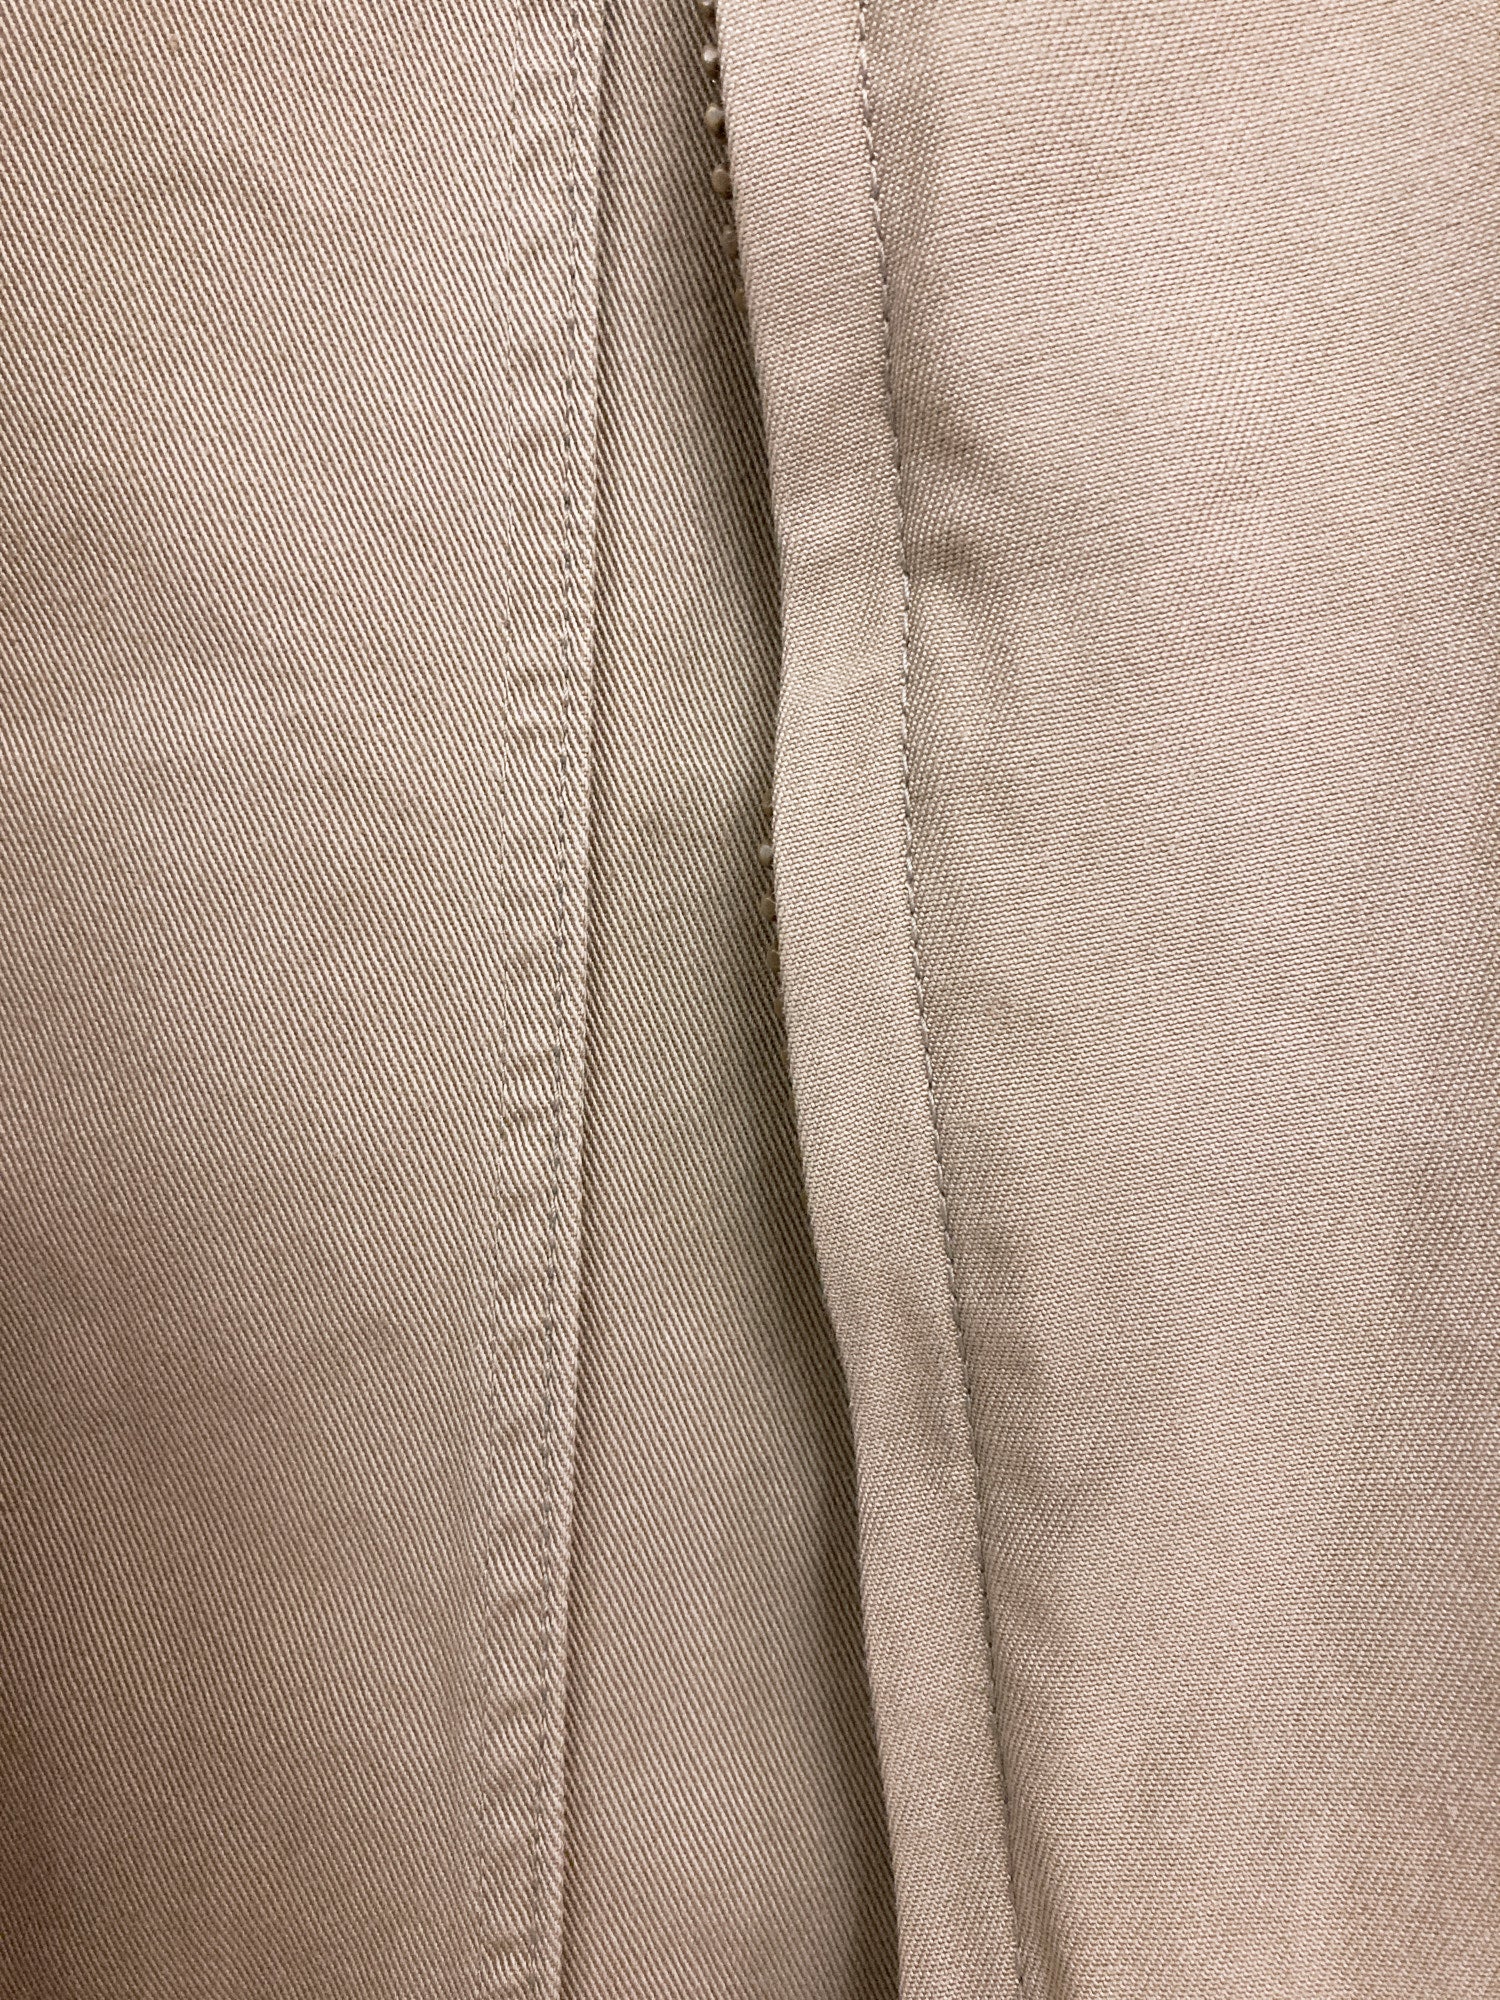 Rip Van Winkle 1990s beige cotton drill zipped shirt jacket - S